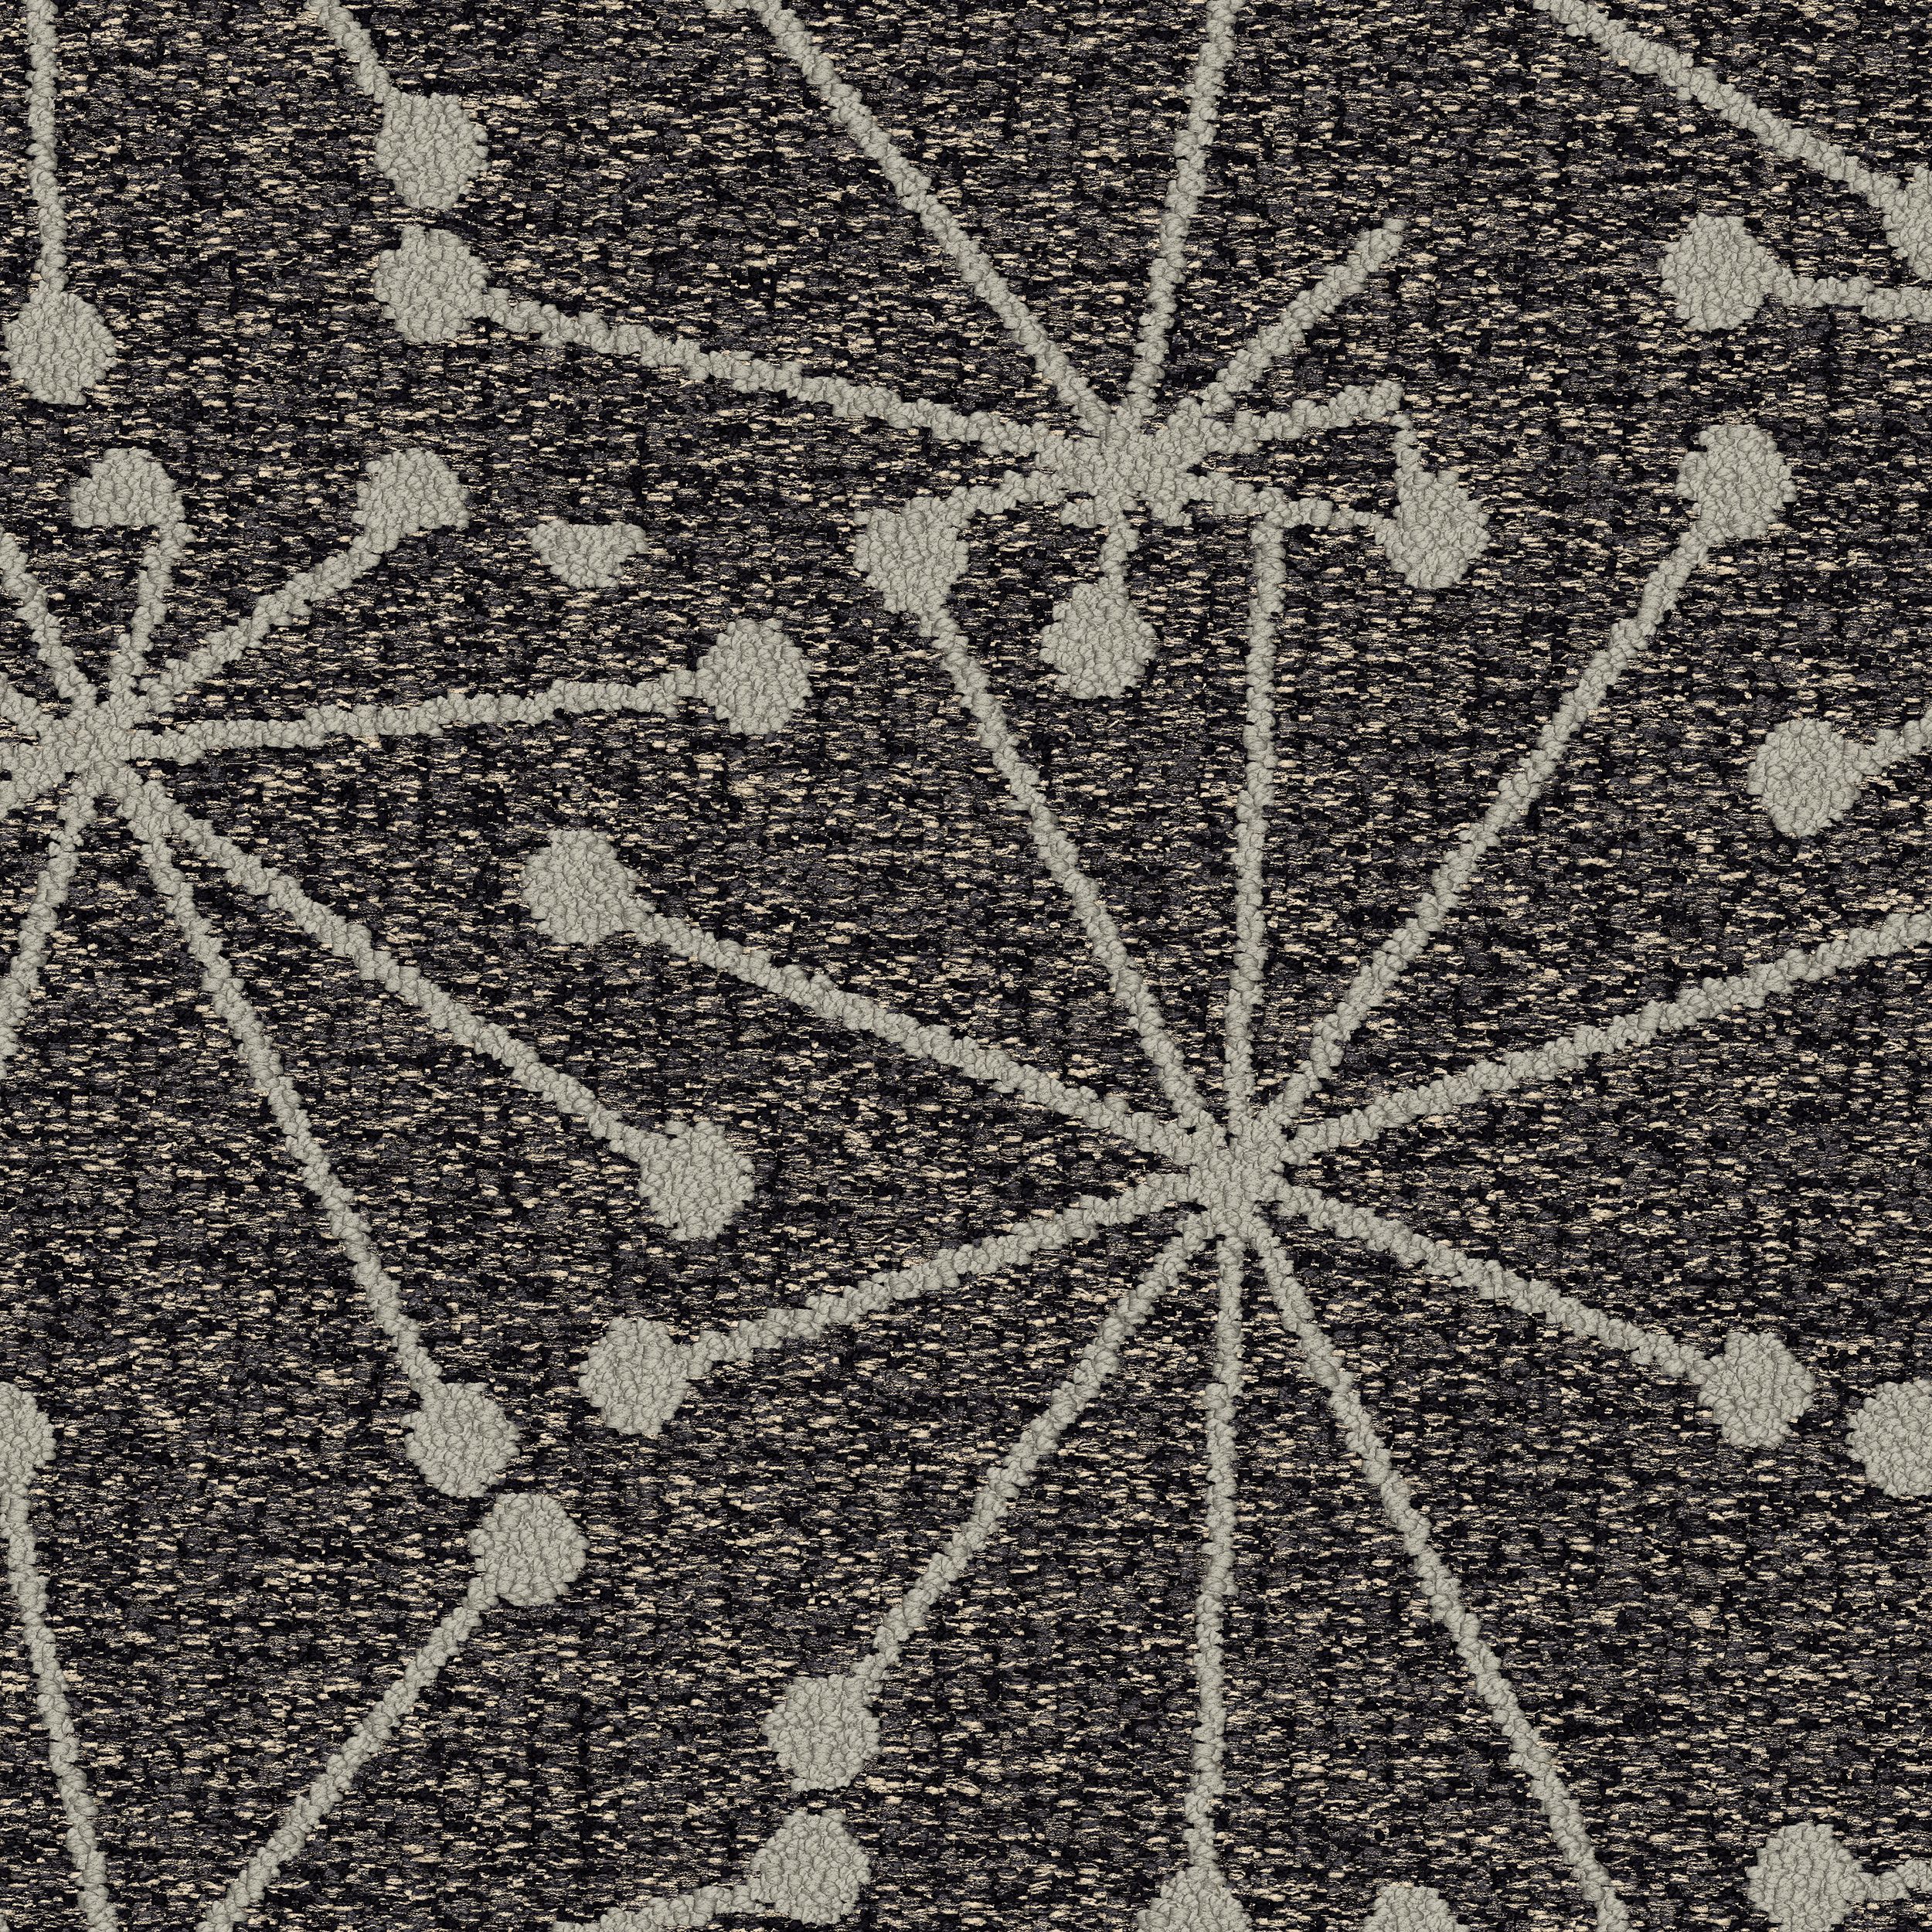 Mod Cafe Carpet Tile In Star Black número de imagen 1